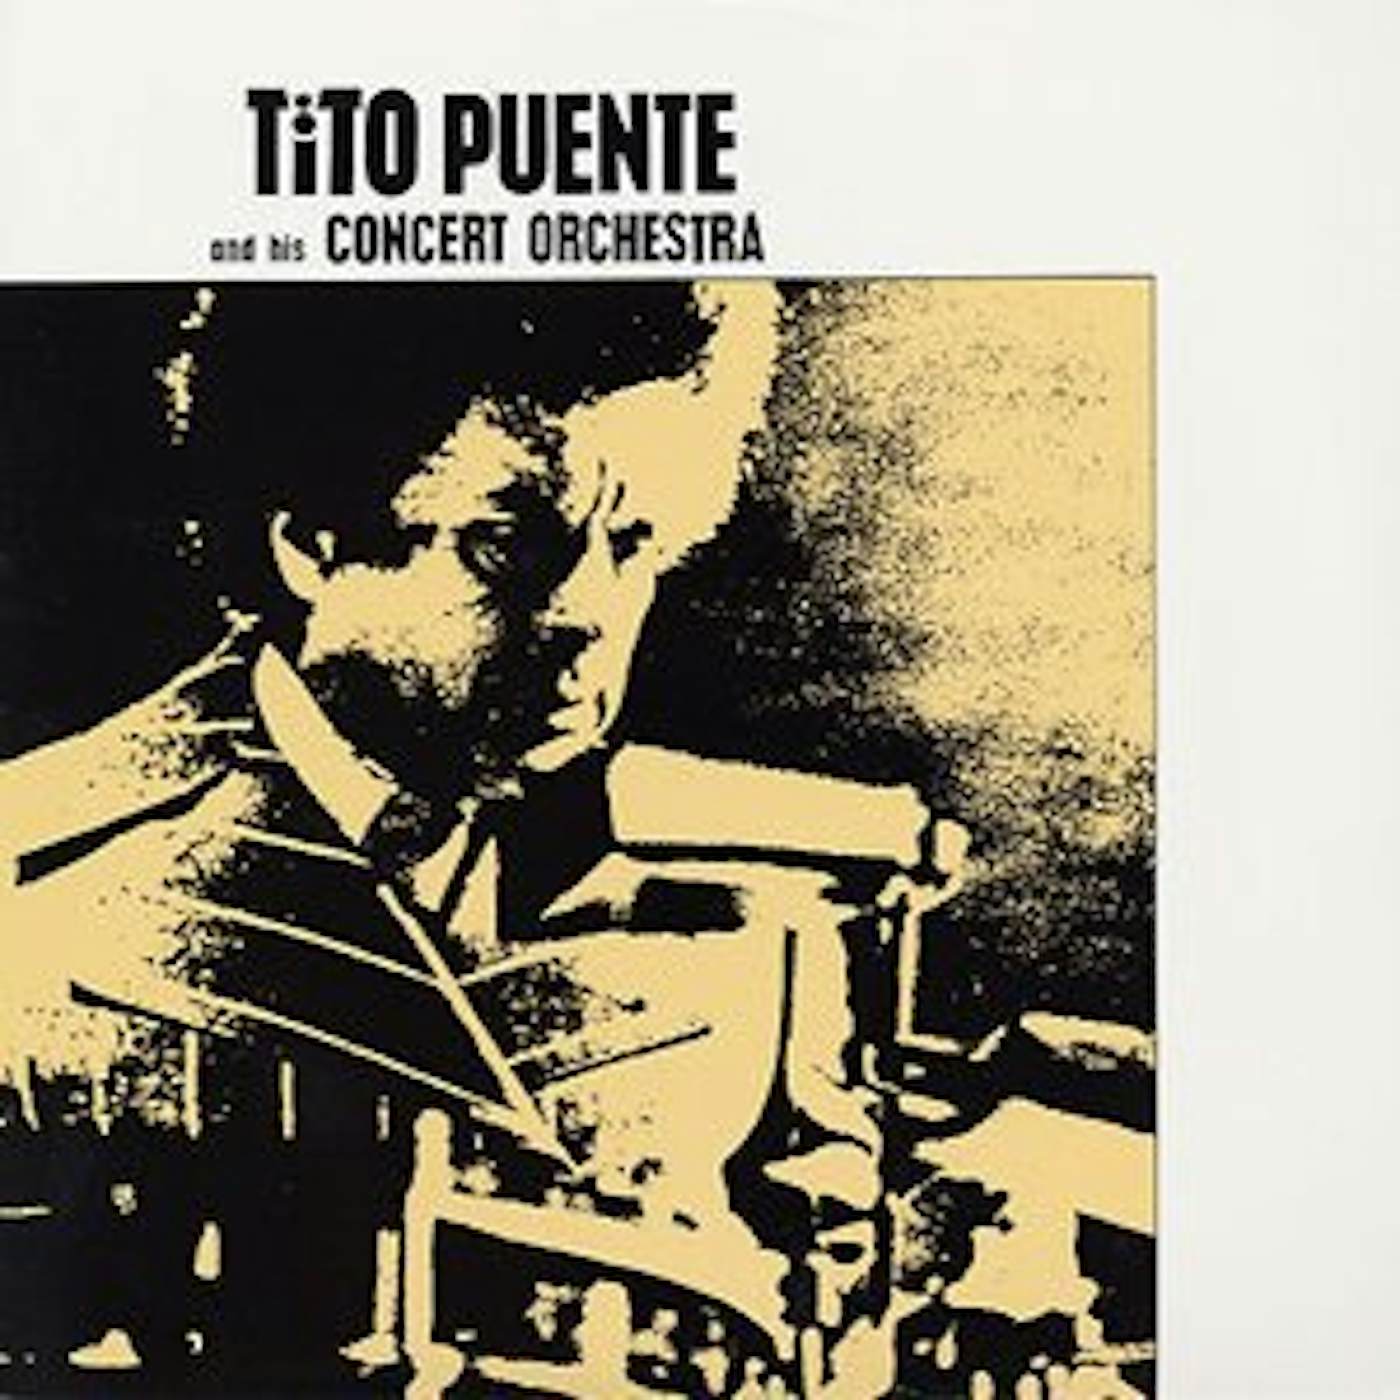 Tito Puente HIS CONCERT ORCHESTRA Vinyl Record